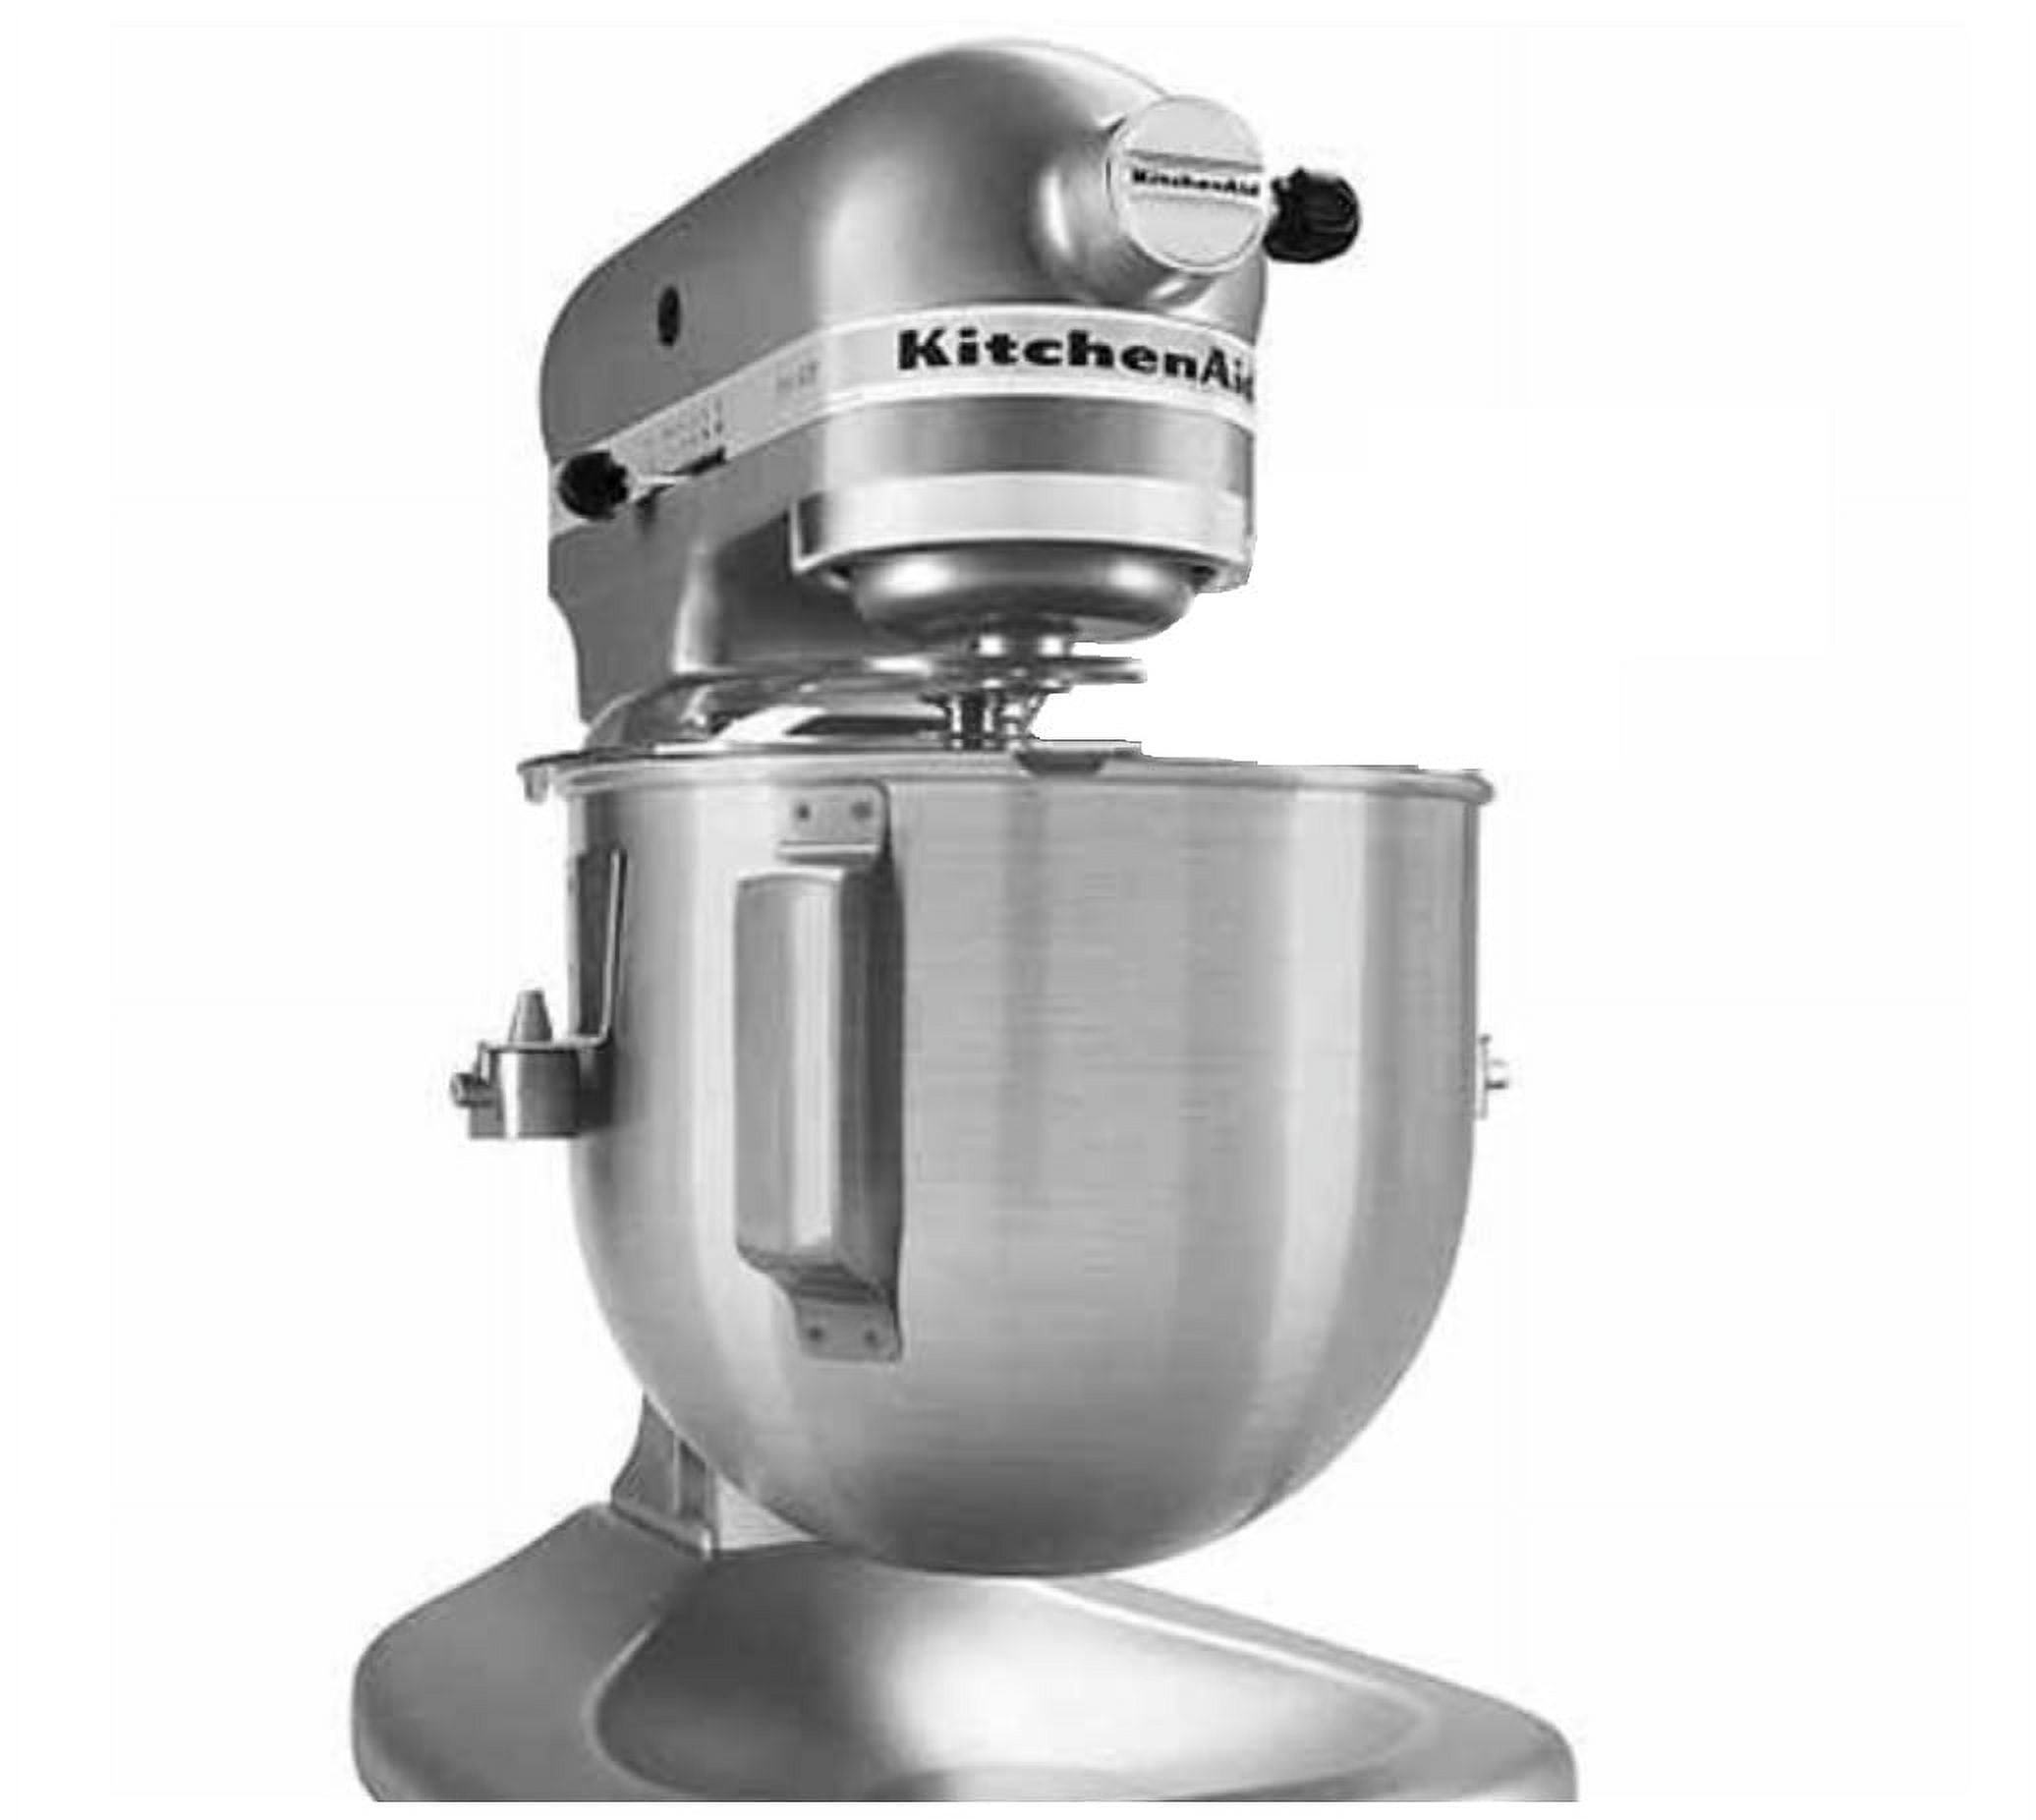 KitchenAid Pro 500 Series 5 Quart Bowl-Lift Stand Mixer, Silver